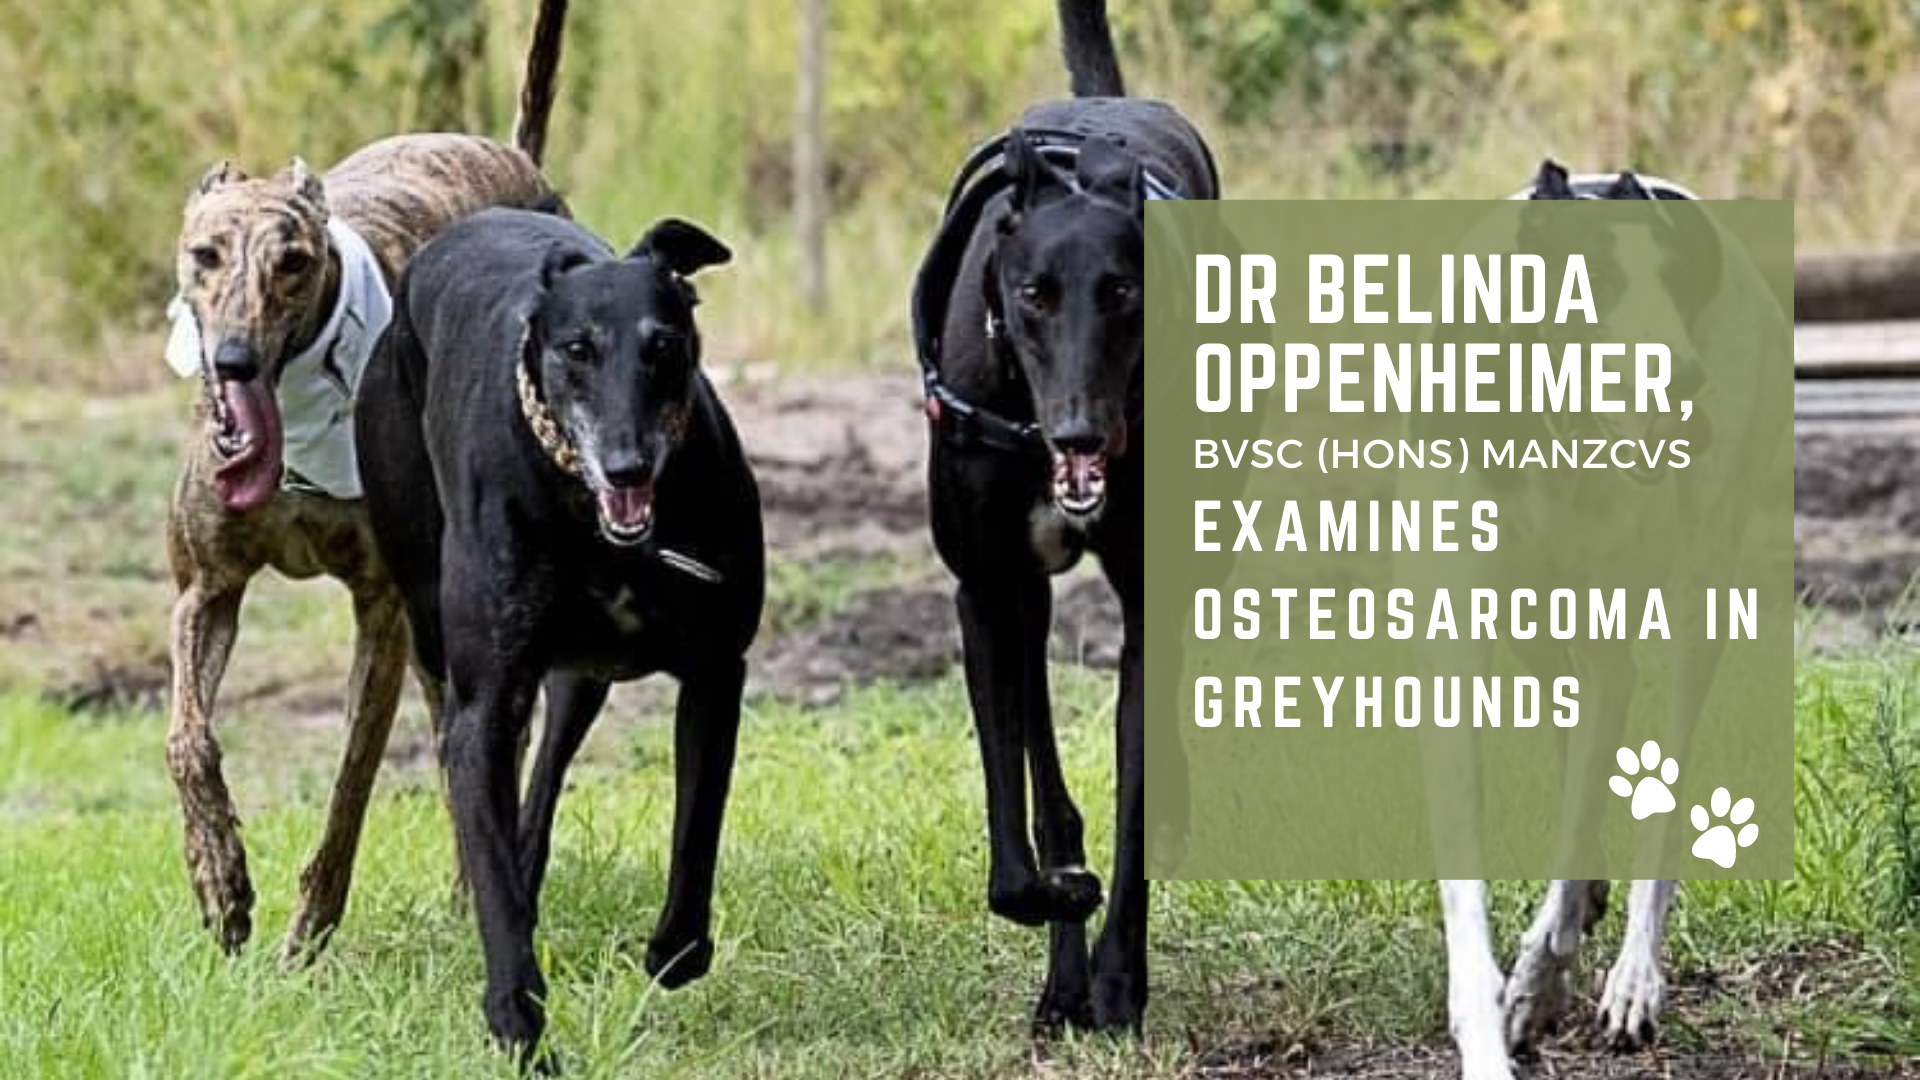 Dr Belinda Oppenheimer examines Osteosarcoma in Greyhounds